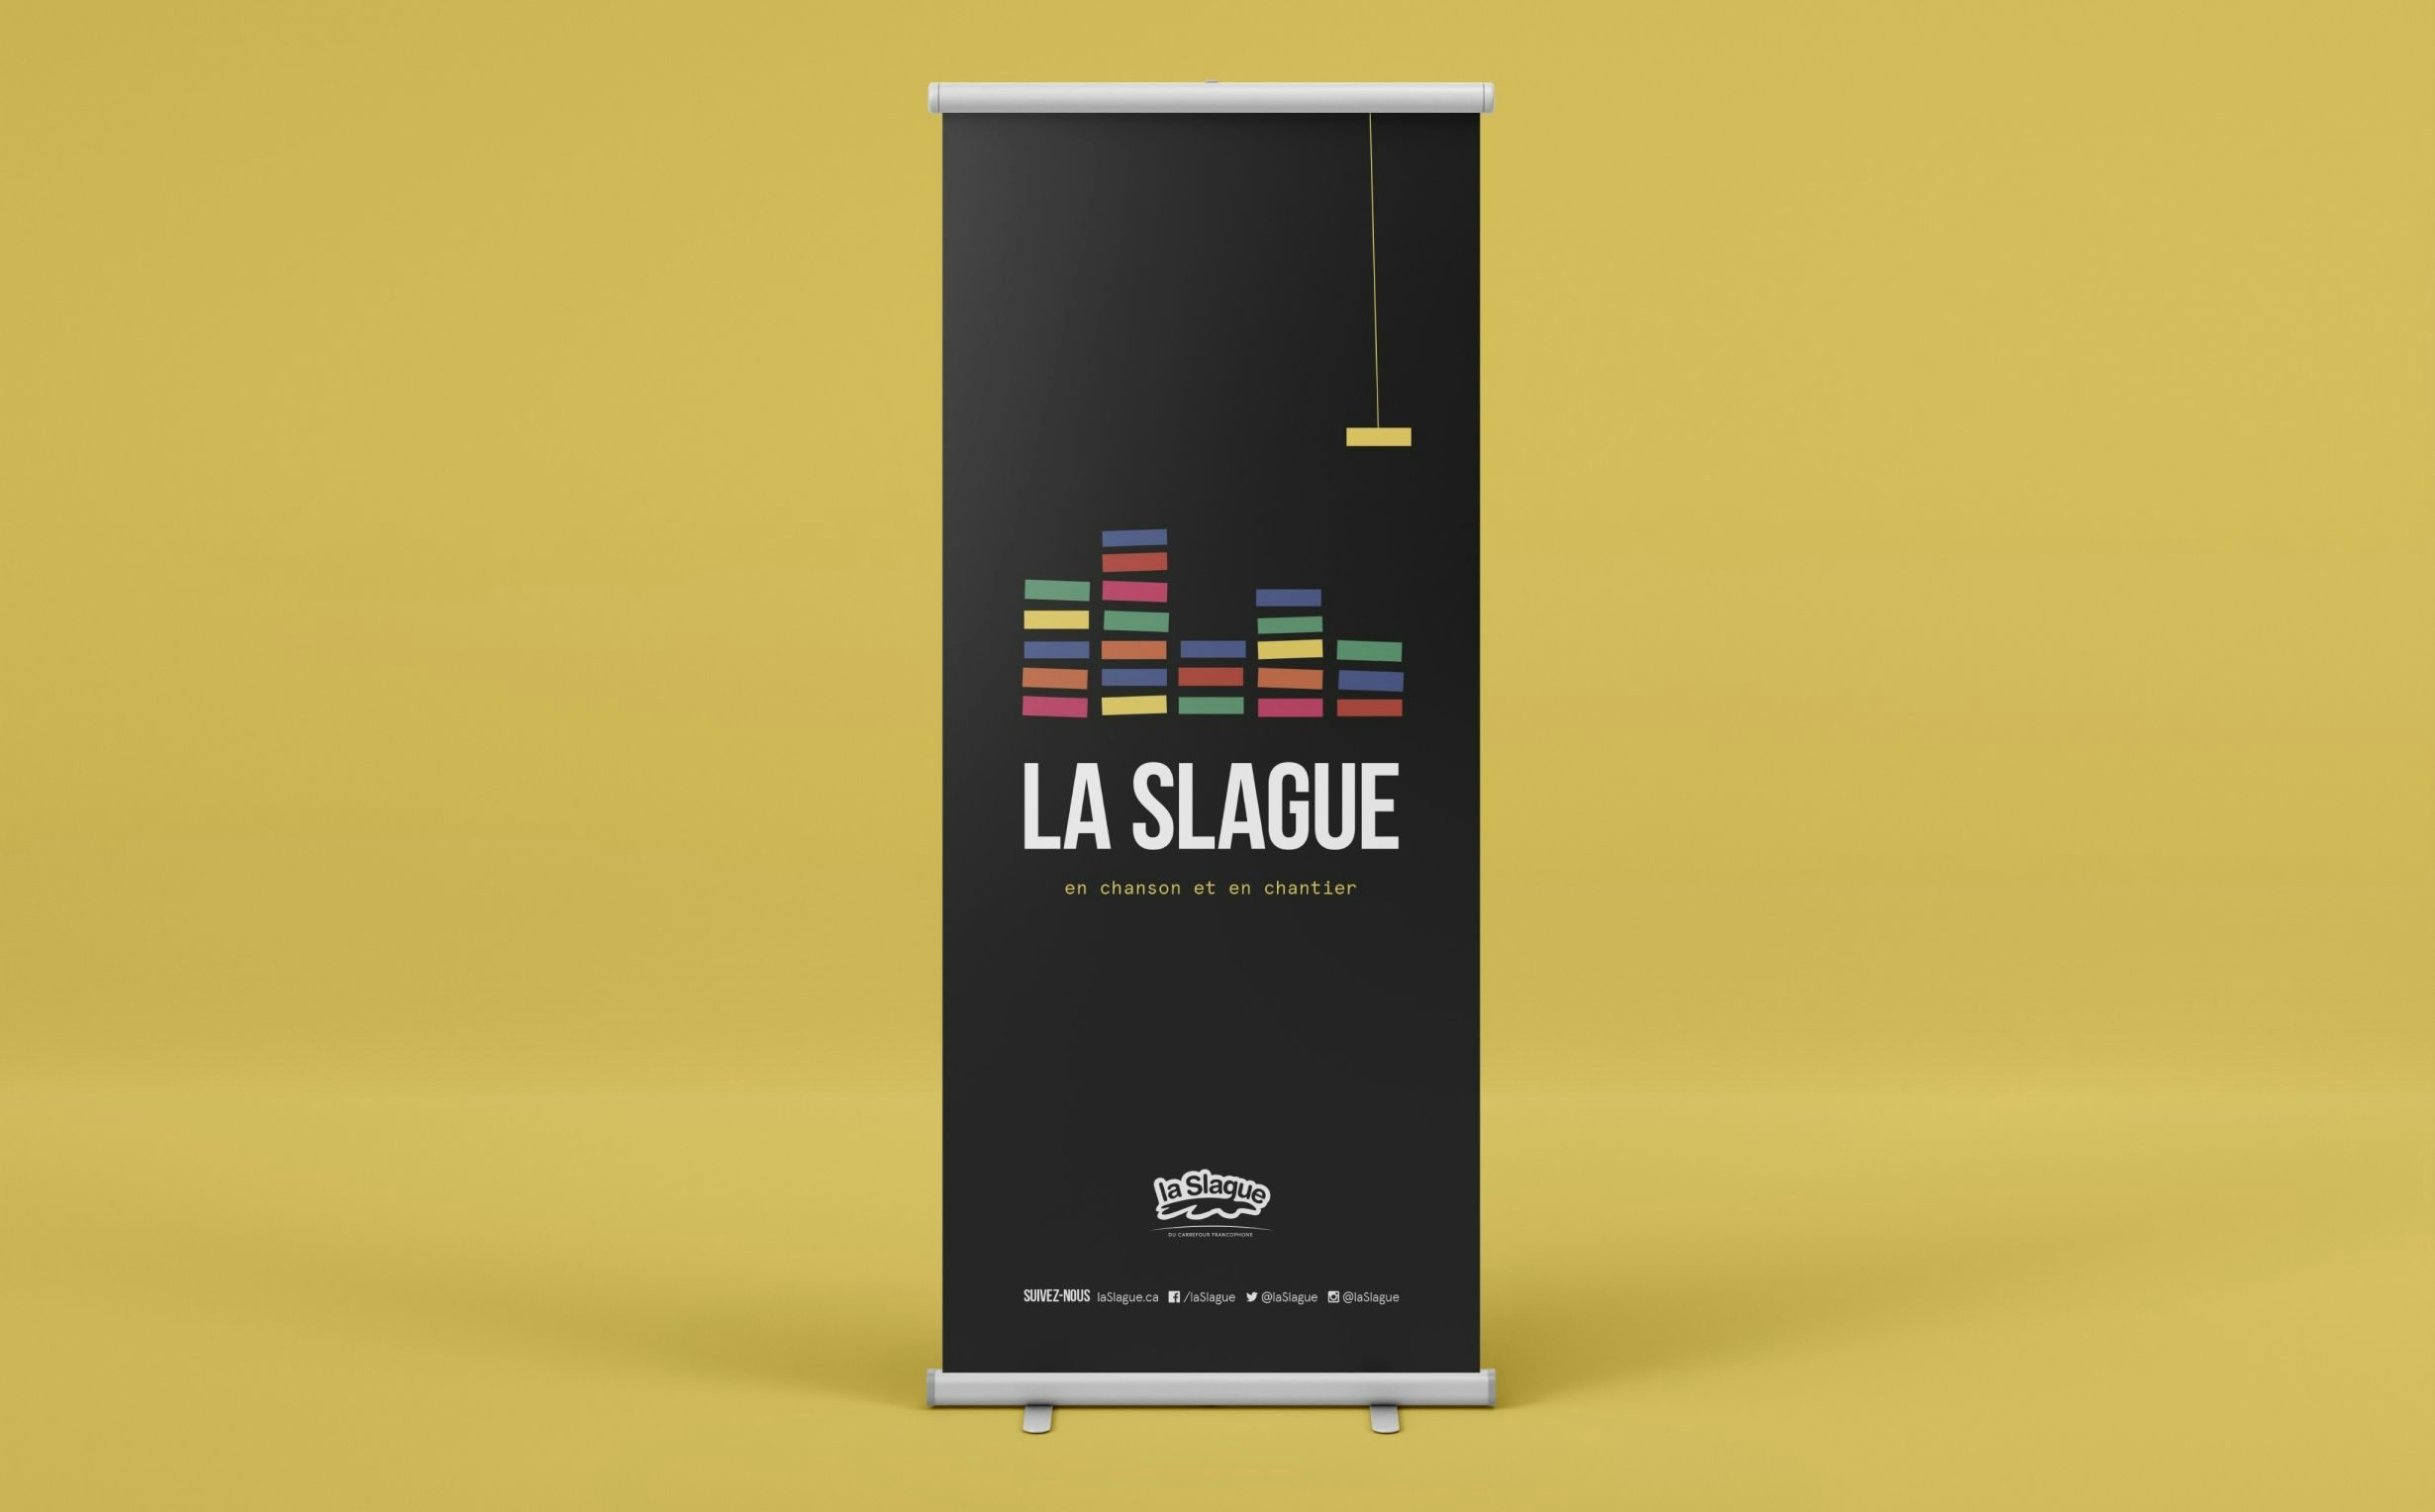 Roll-up banner for La Slague's 2019-2020 season